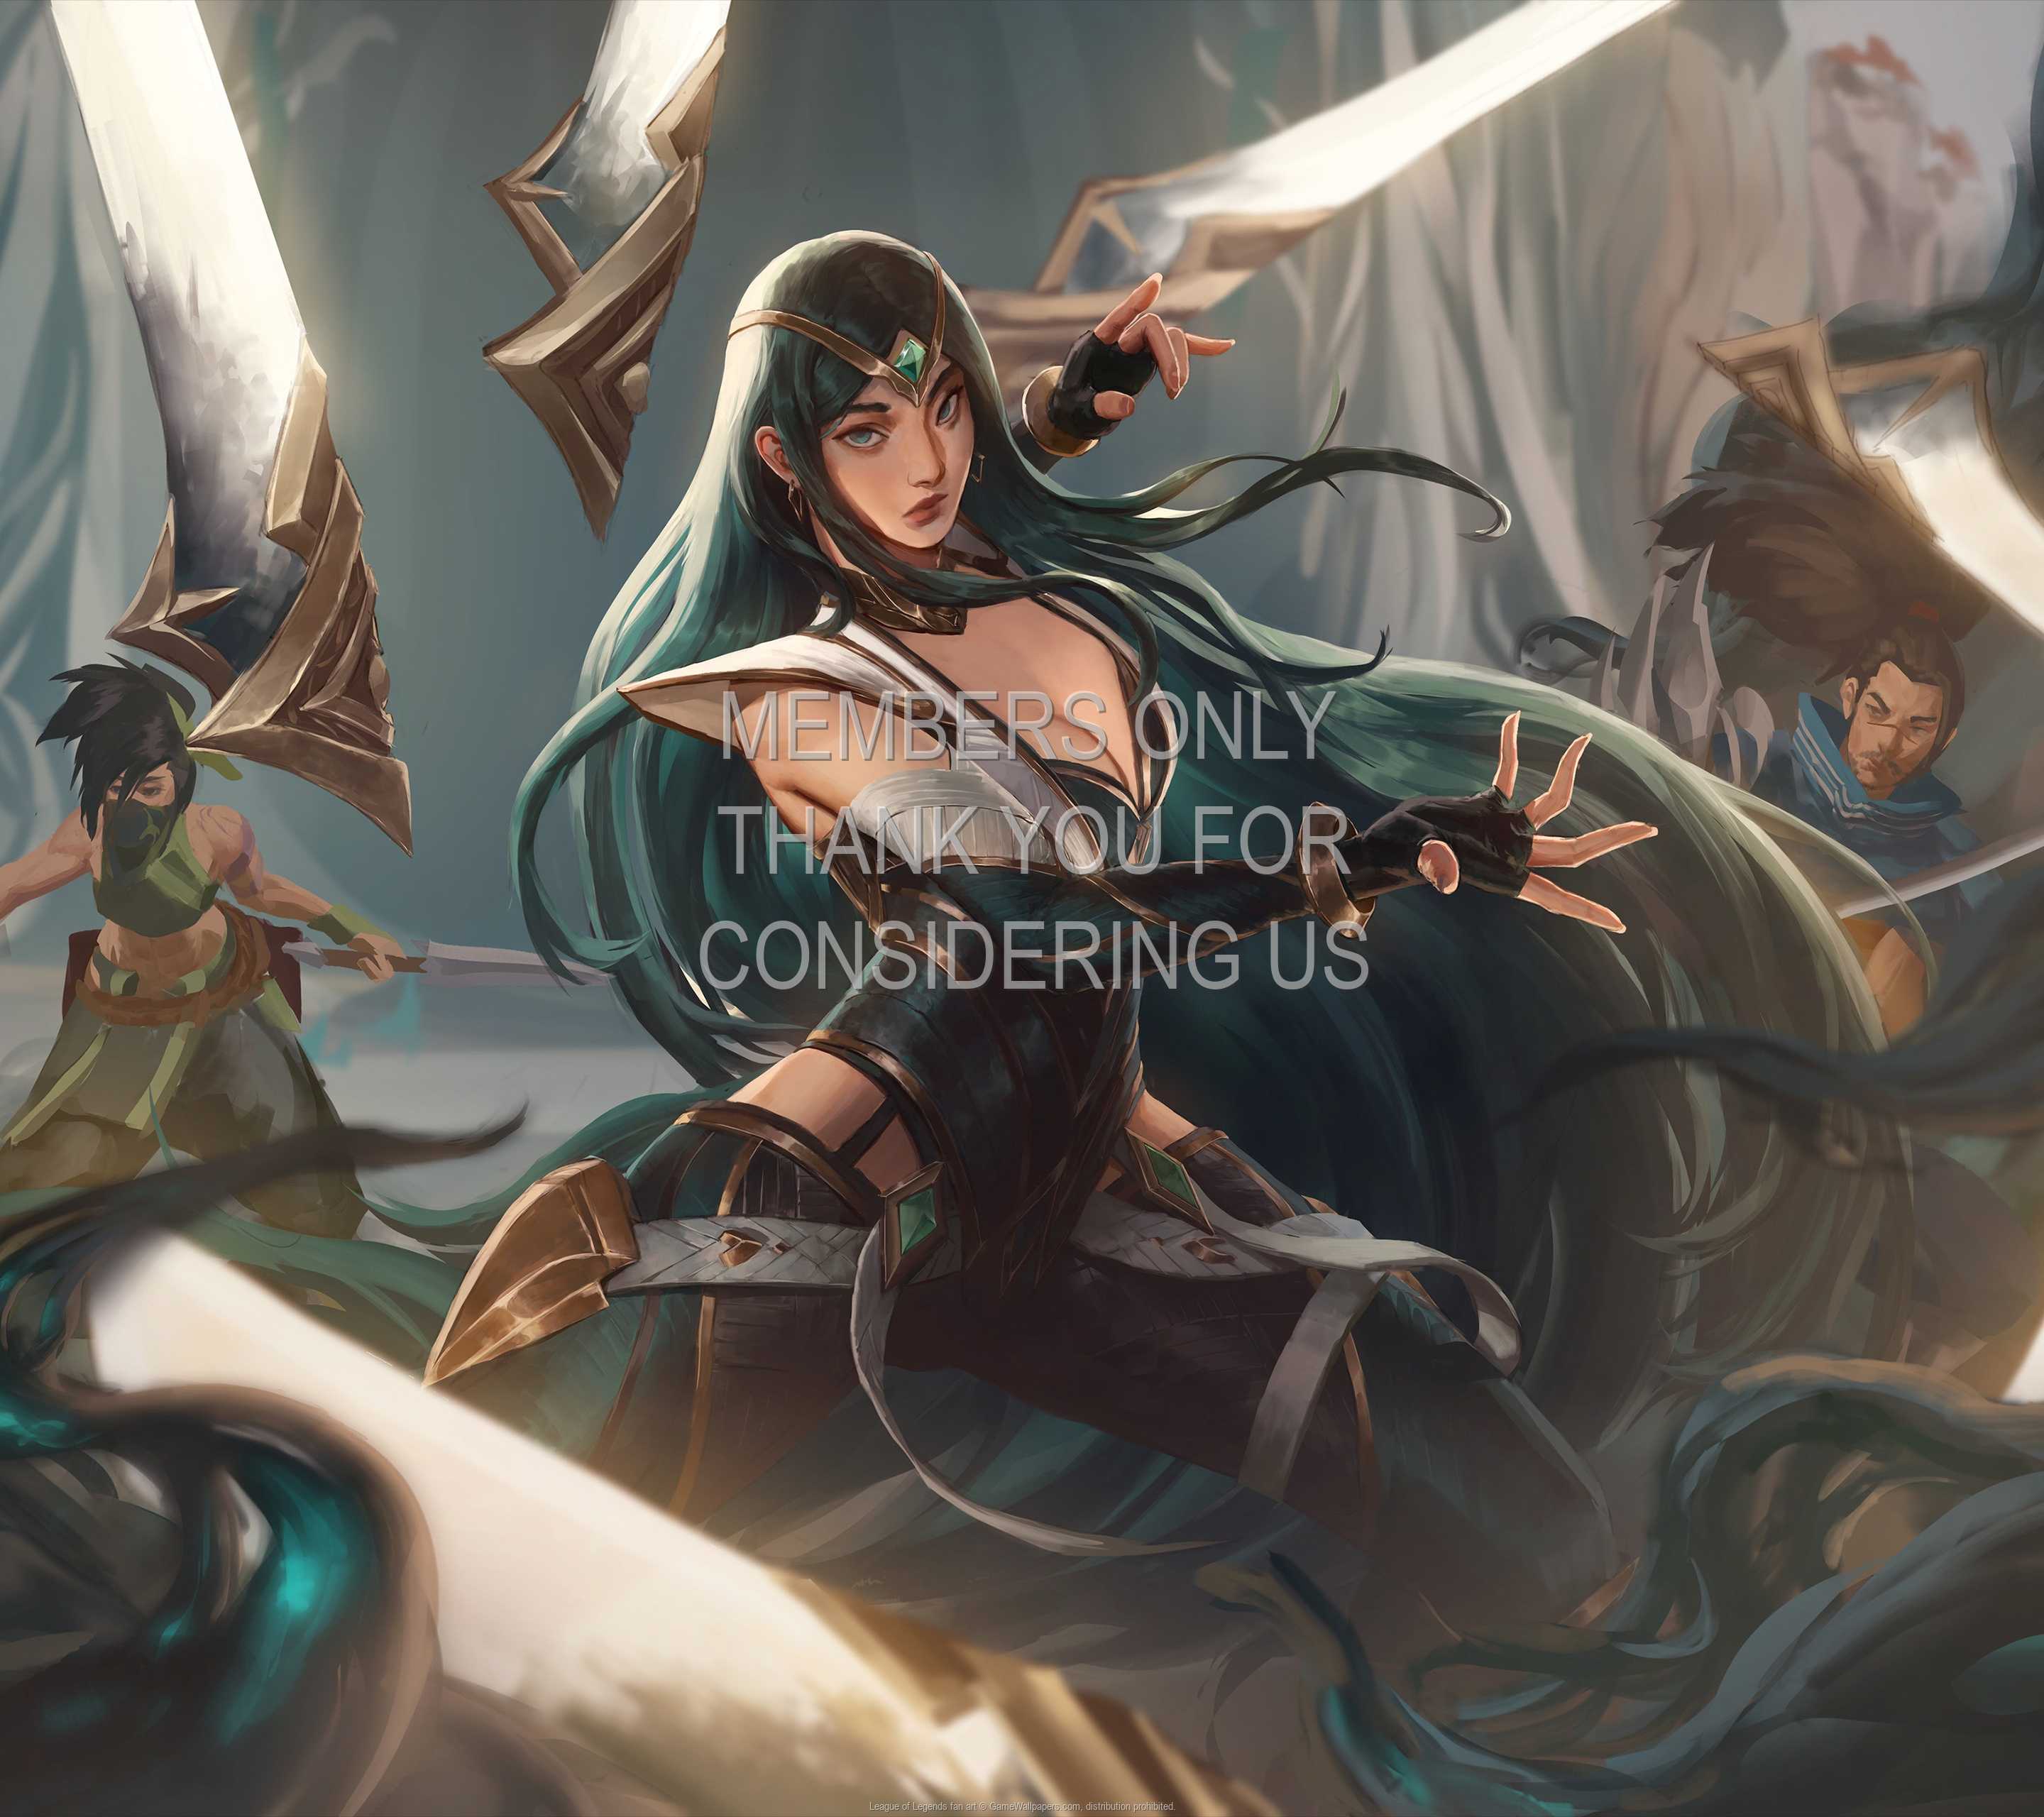 League of Legends fan art 1440p Horizontal Mobile wallpaper or background 35